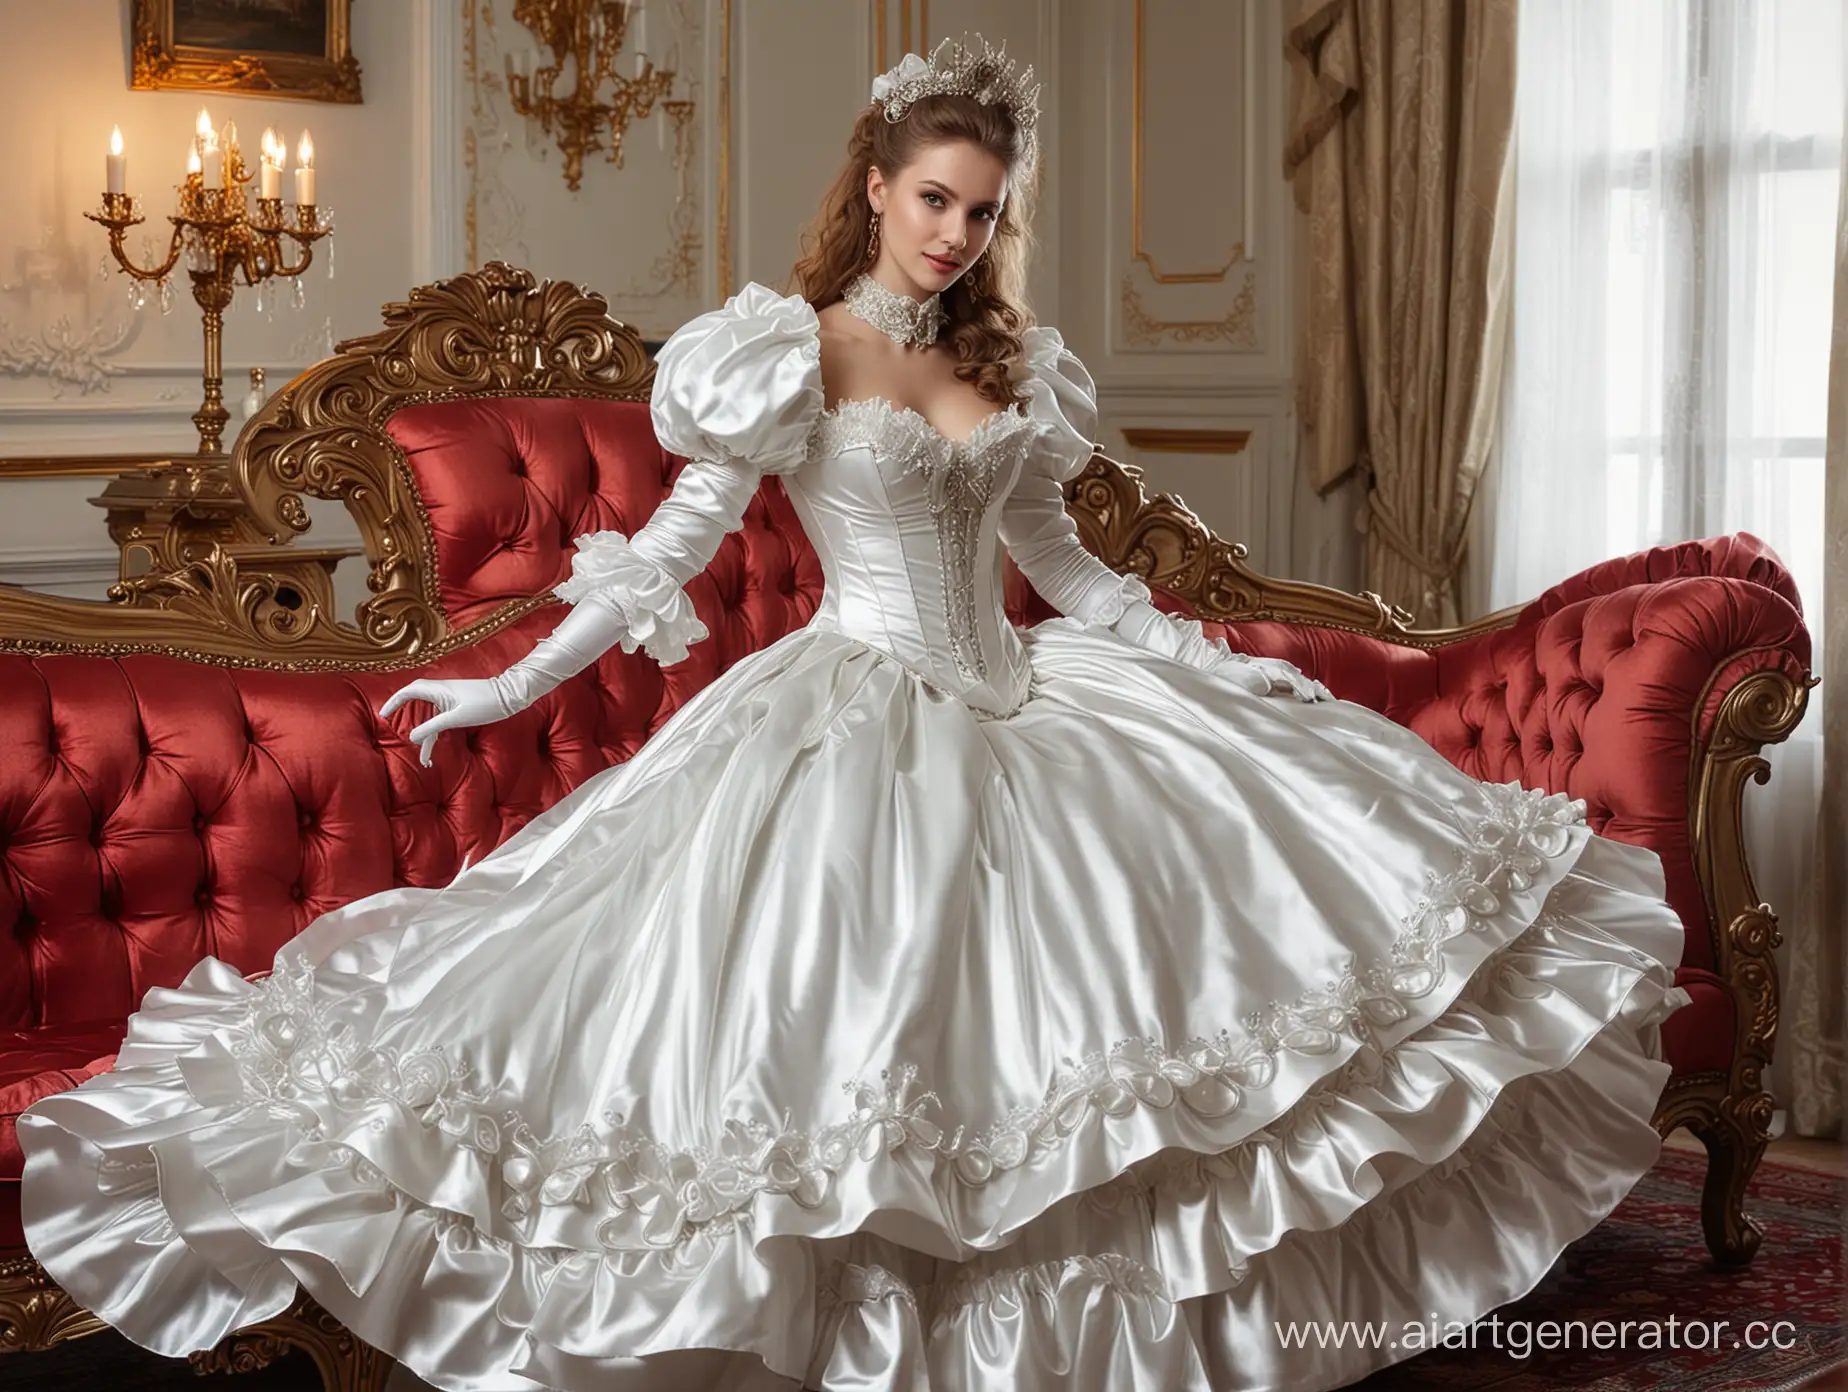 25YearOld-GirlDemon-Tzeentch-in-Luxurious-Satin-Dress-at-Throne-Room-Ball